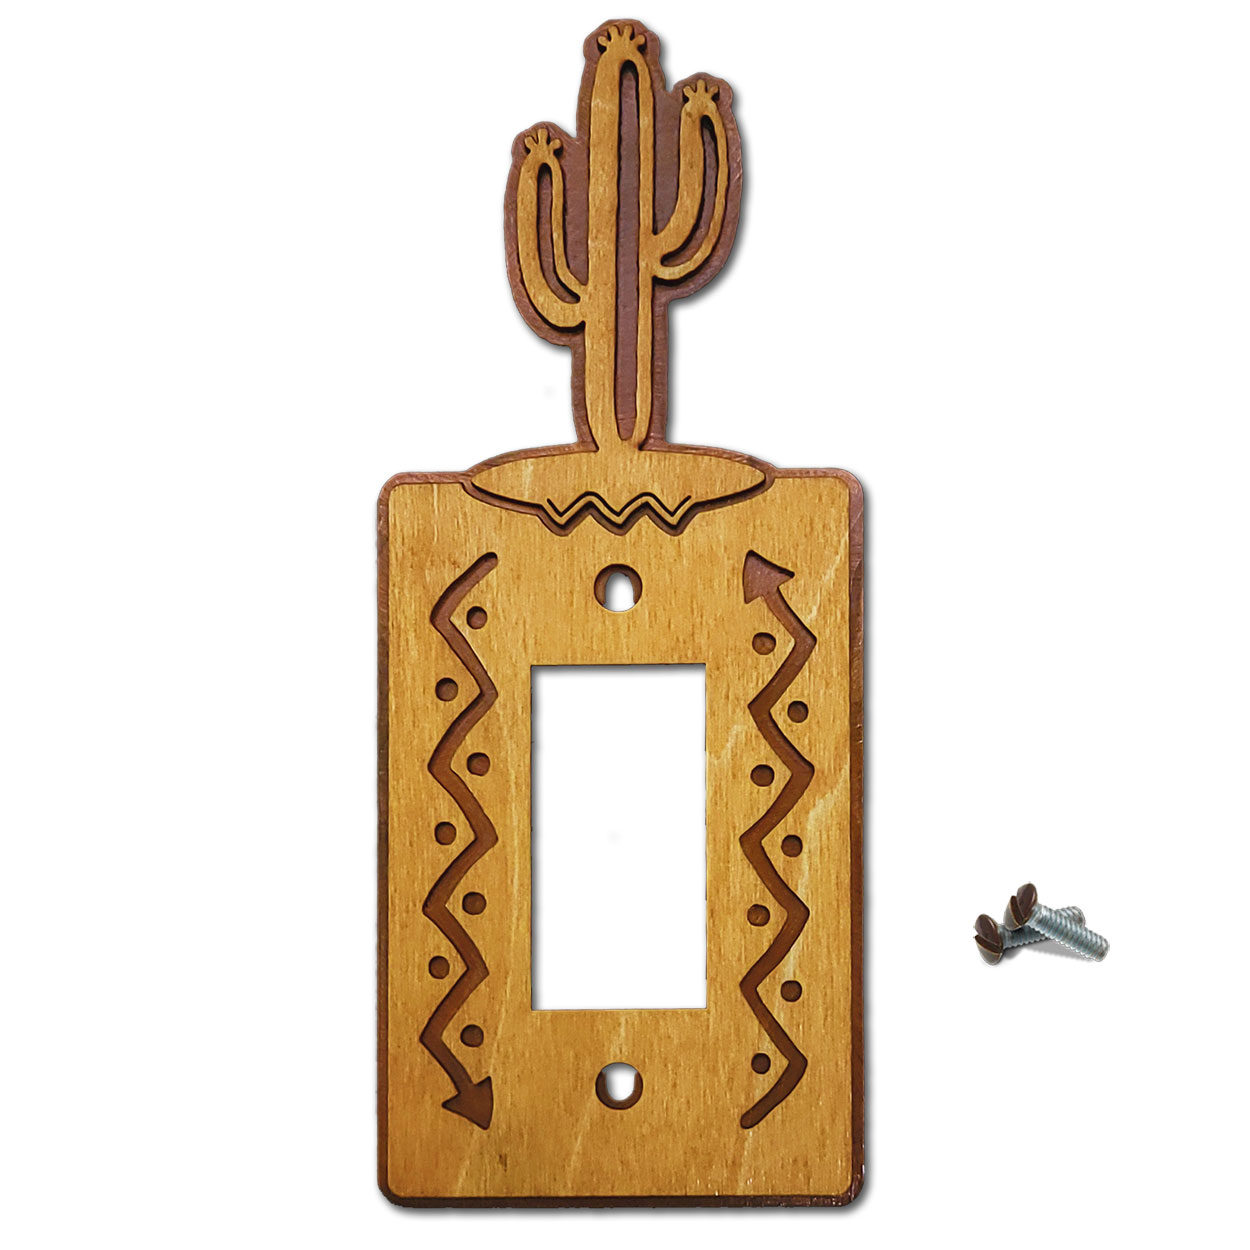 167121R - Saguaro Cactus Southwestern Decor Single Rocker Switch Plate in Golden Sienna